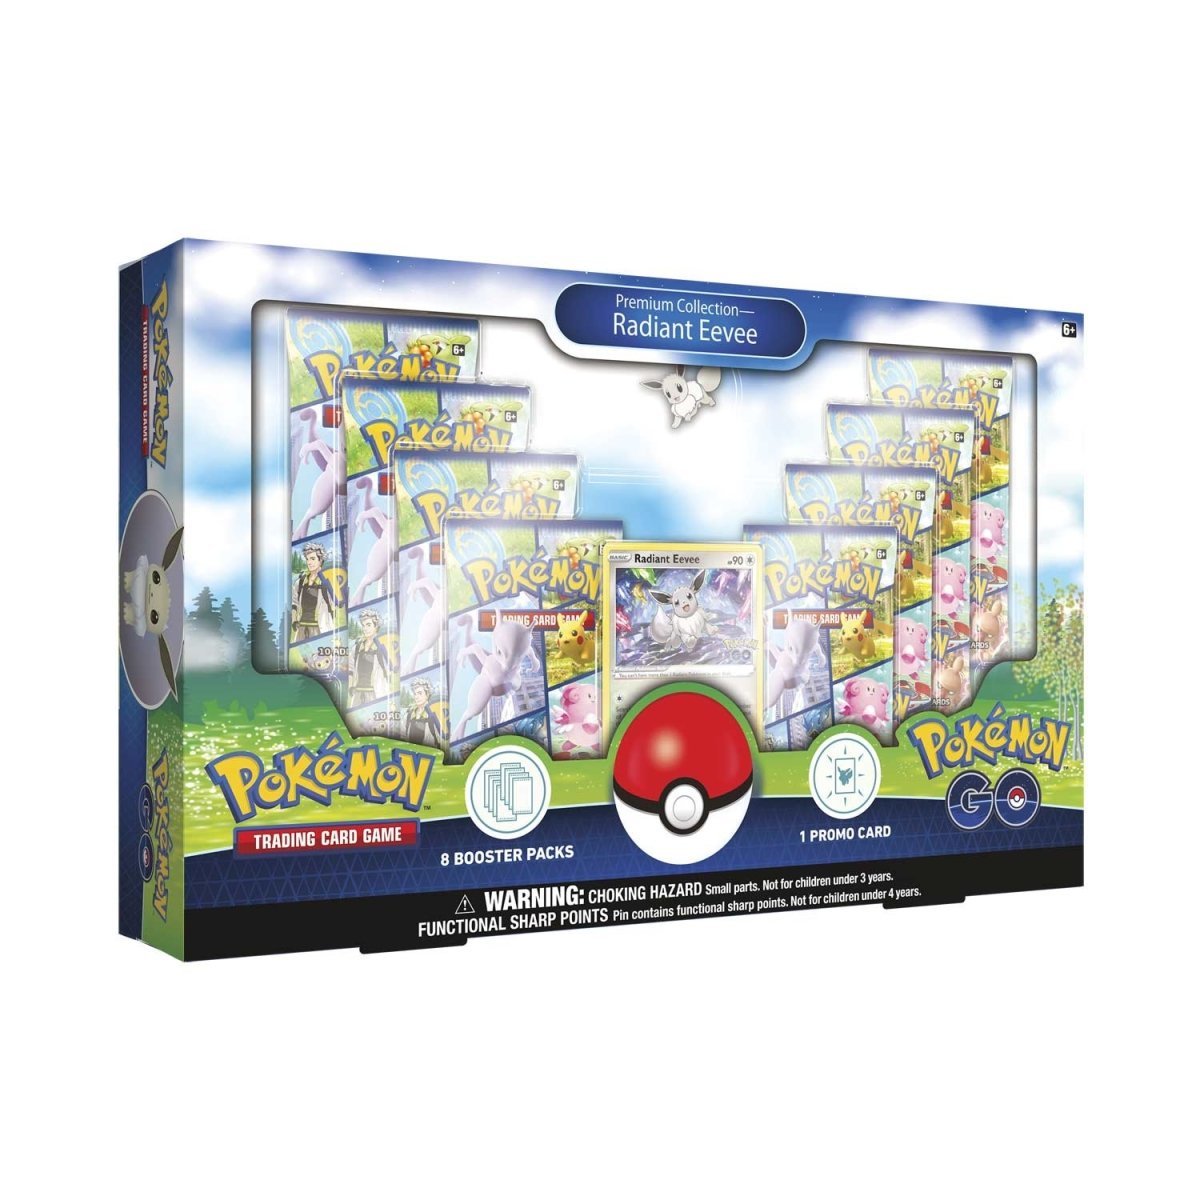 Pokémon TCG: Pokémon GO Radiant Eevee Premium Collection Box - PokeRvmCollection Box